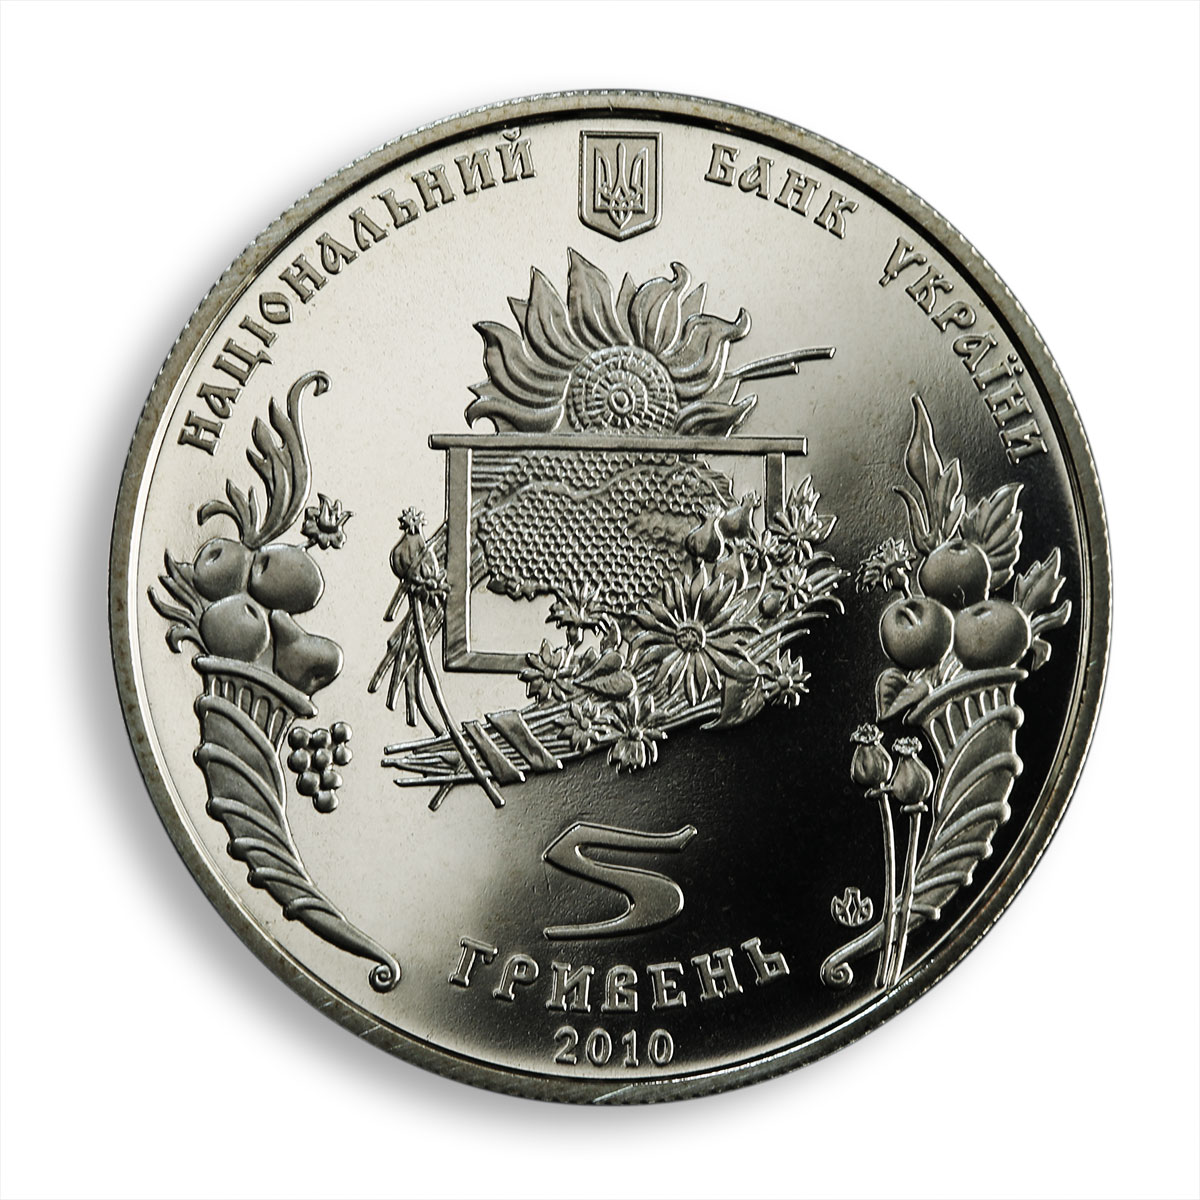 Ukraine 5 hryvnia Spas (Transfiguration of Jesus Christ) feast nickel coin 2010